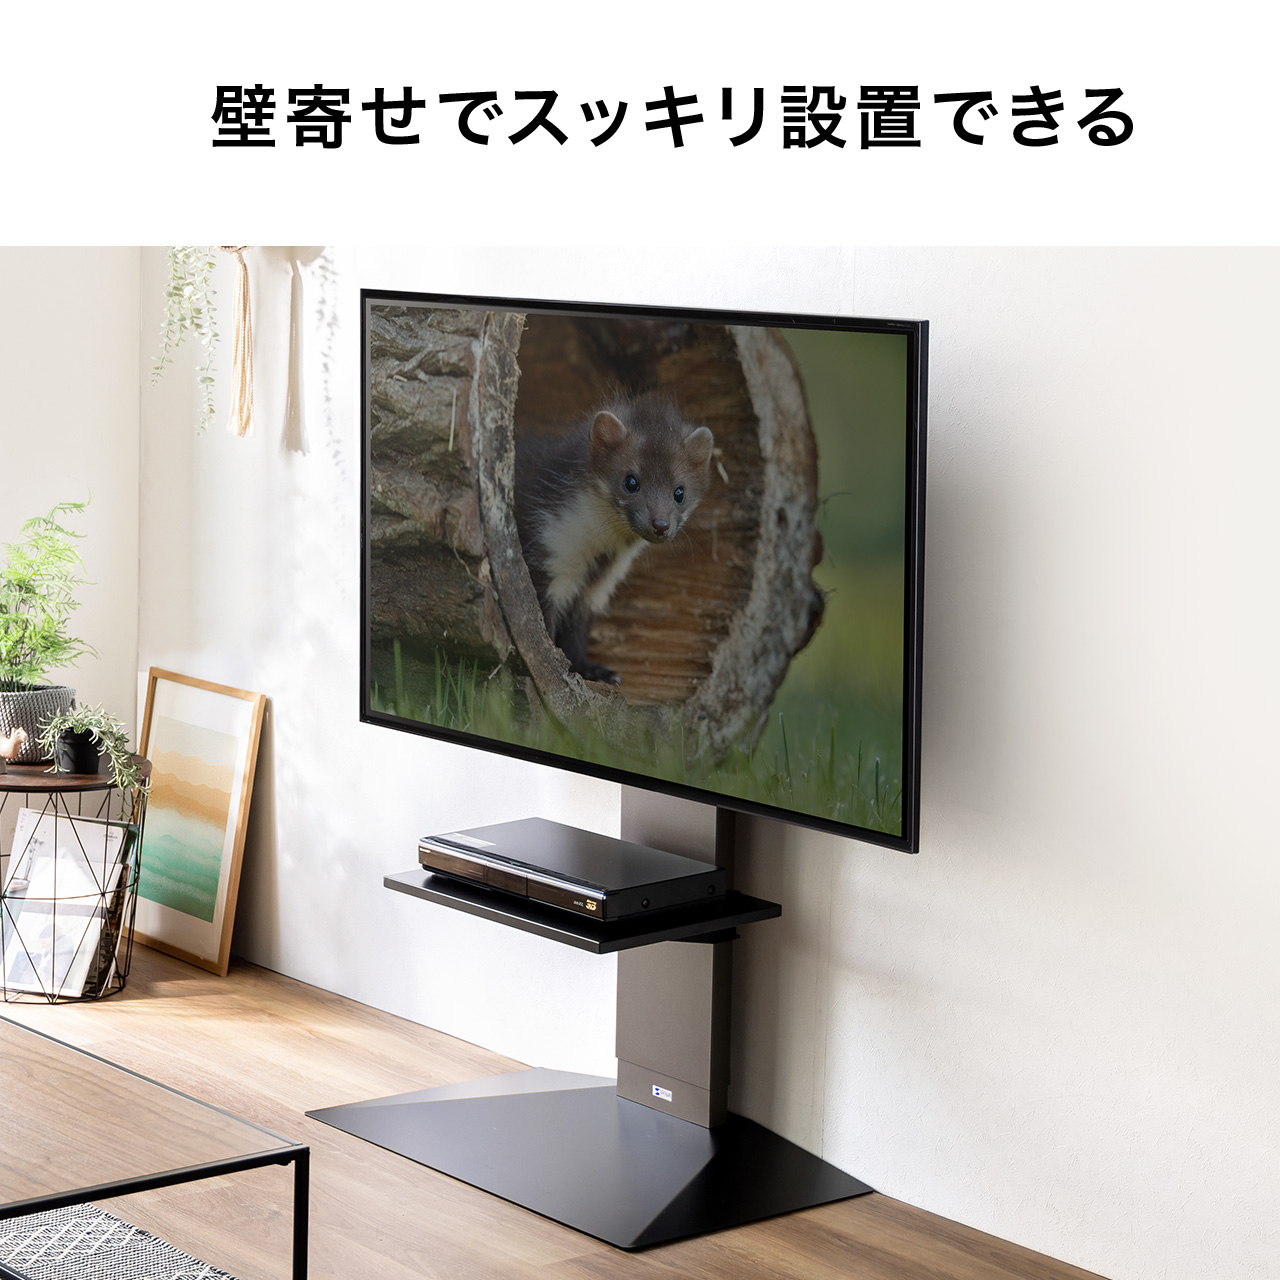 SONY BRAVIA 46型液晶テレビ テレビスタンド付 - テレビ